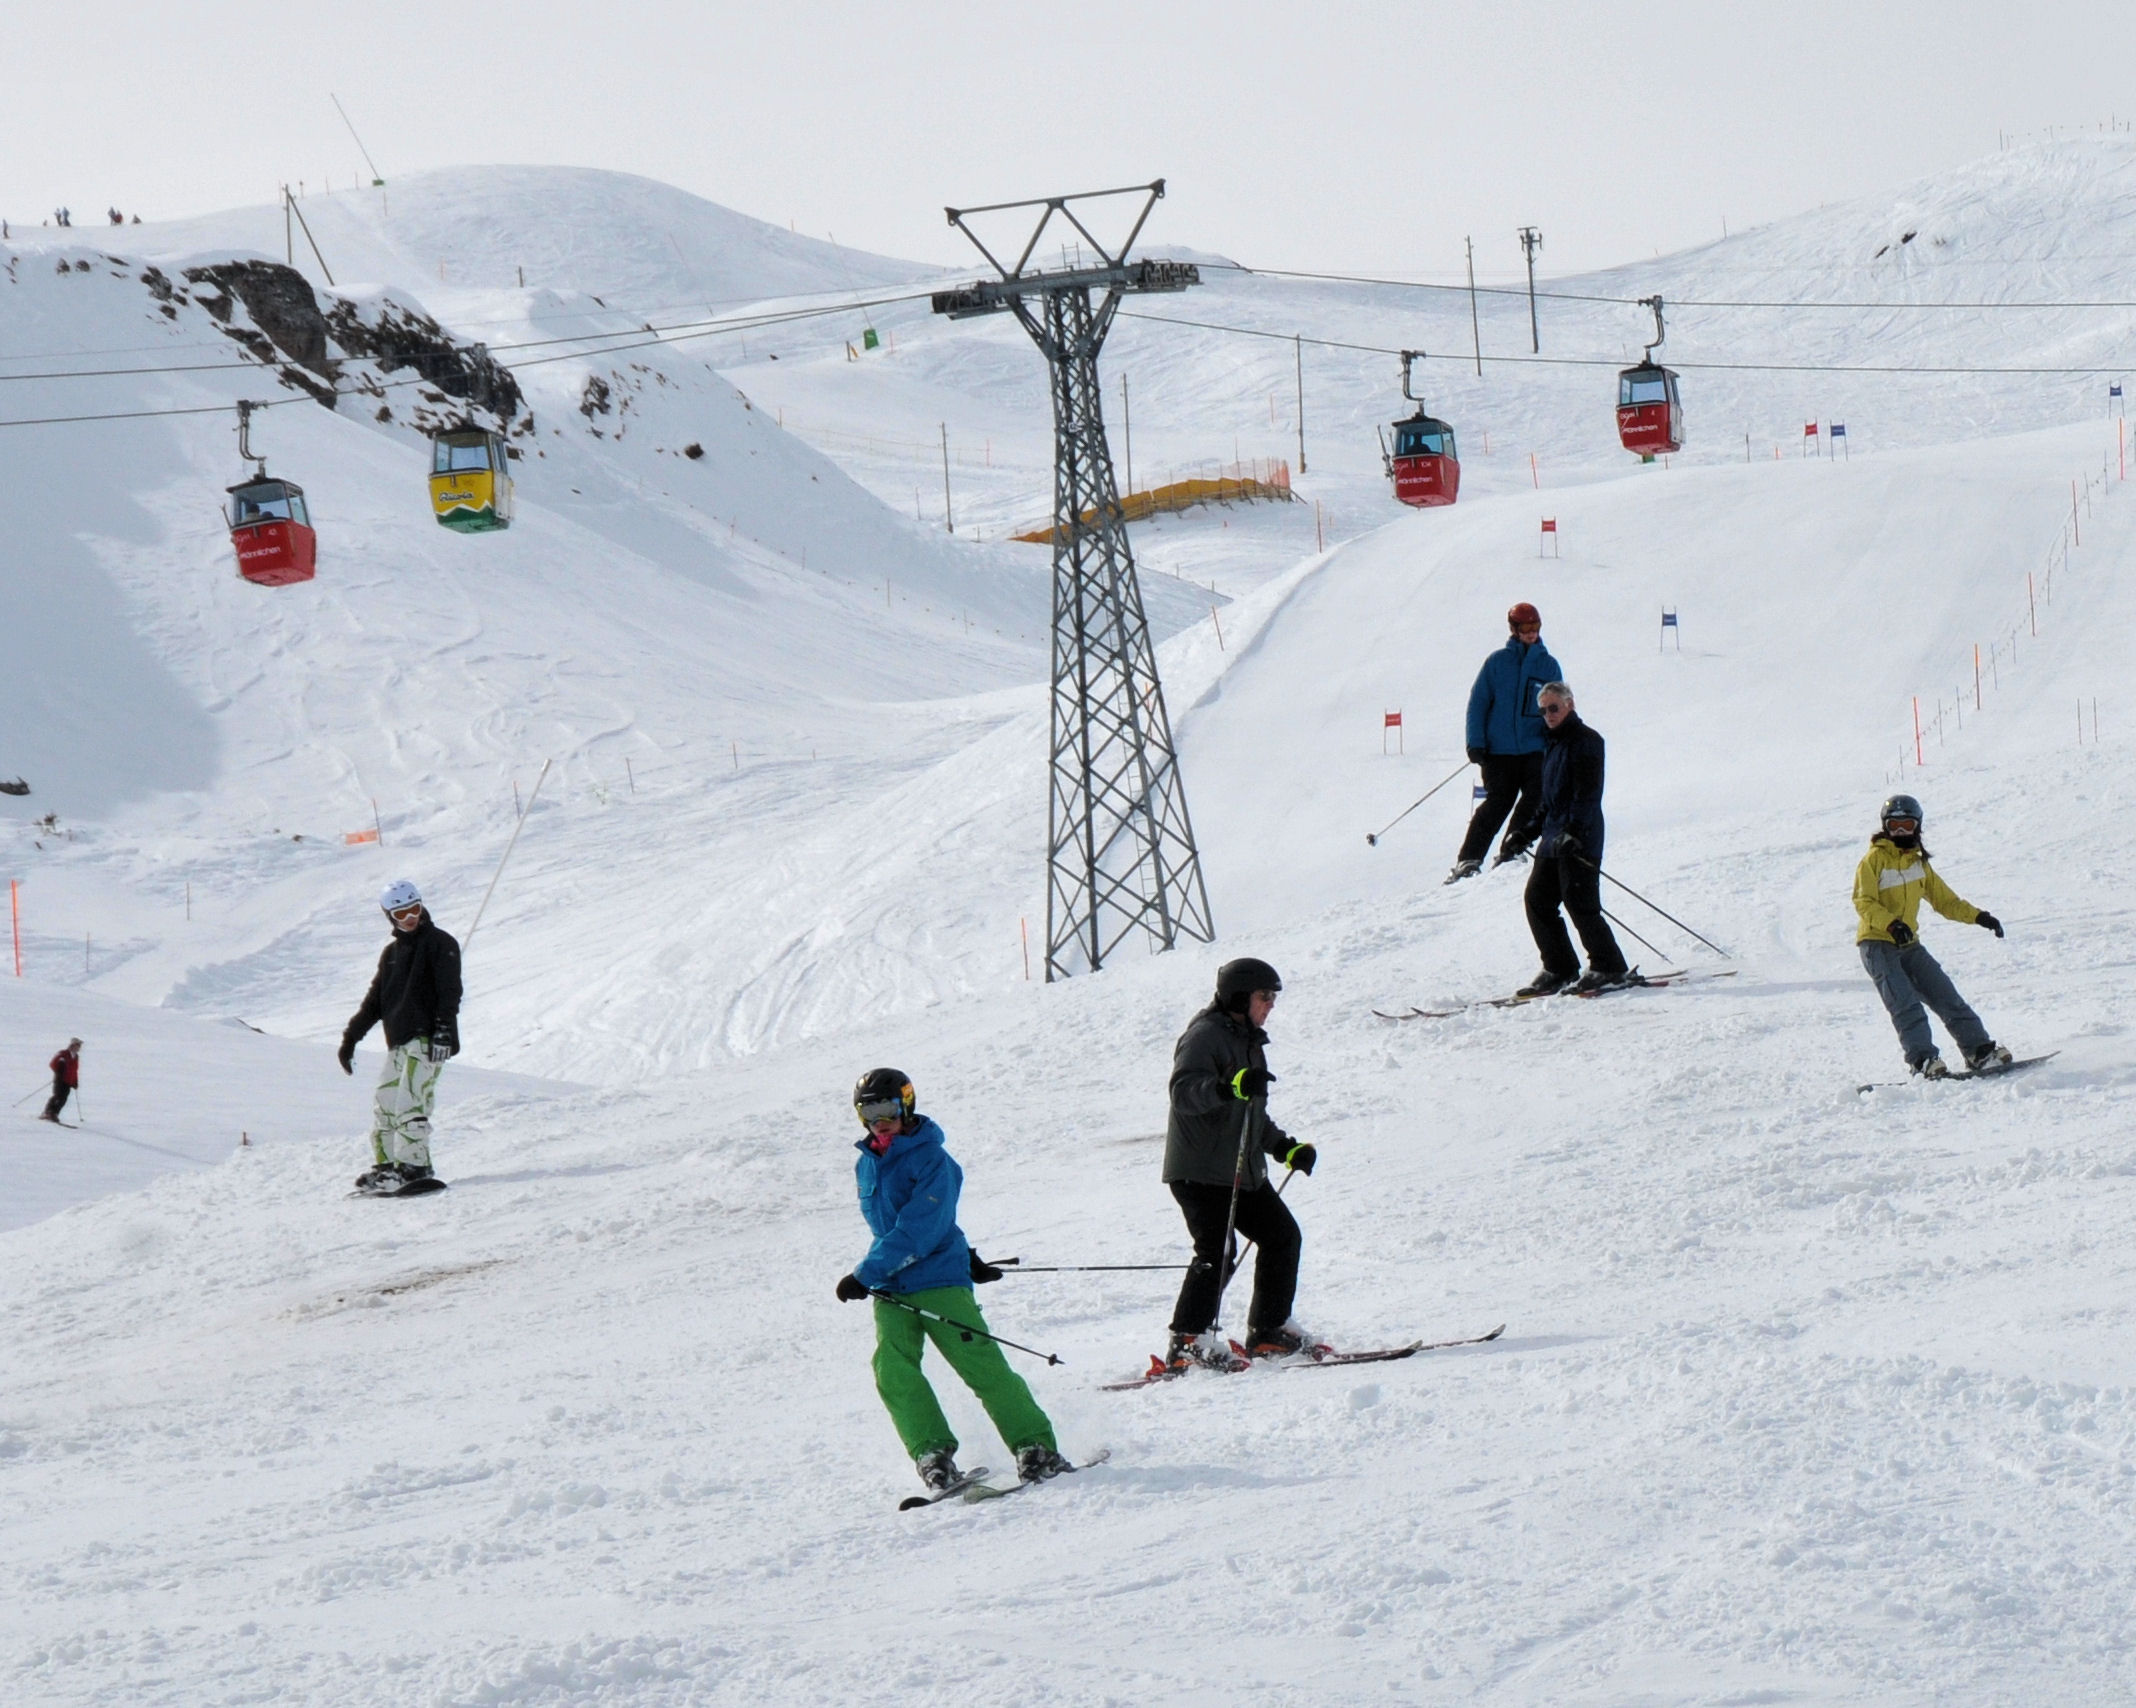 Places to learn to ski in Zermatt | Zermatt